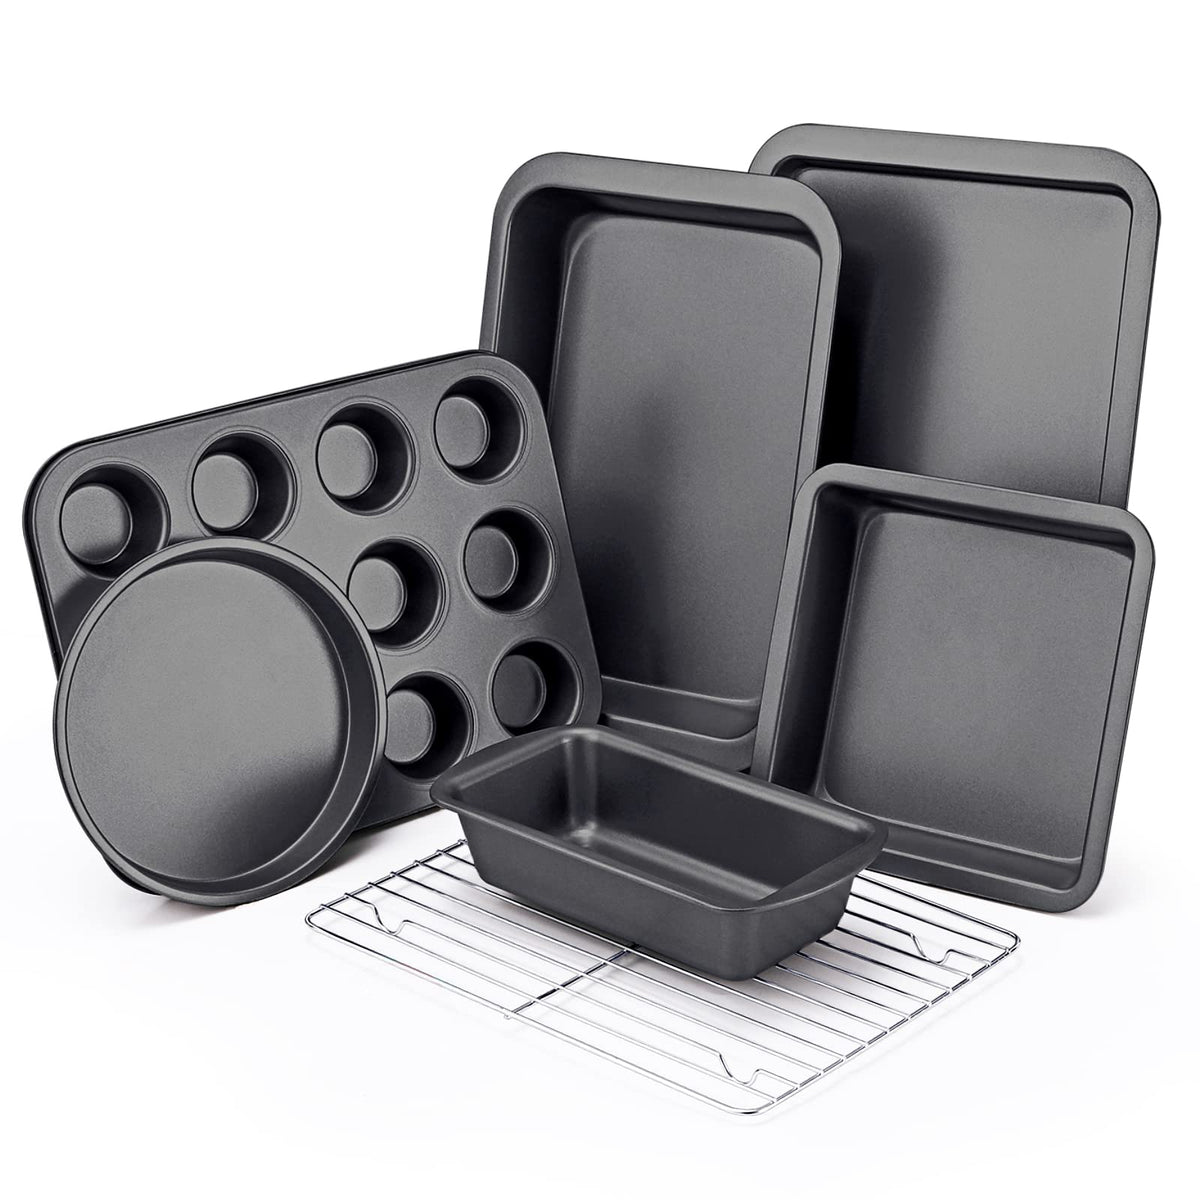 Bakken- Swiss Baking Set - 6 Piece - Deluxe Non Stick Black Coating Inside and Outside - Carbon Steel Bakeware Set - PFOA PFOS and PTFE Fre